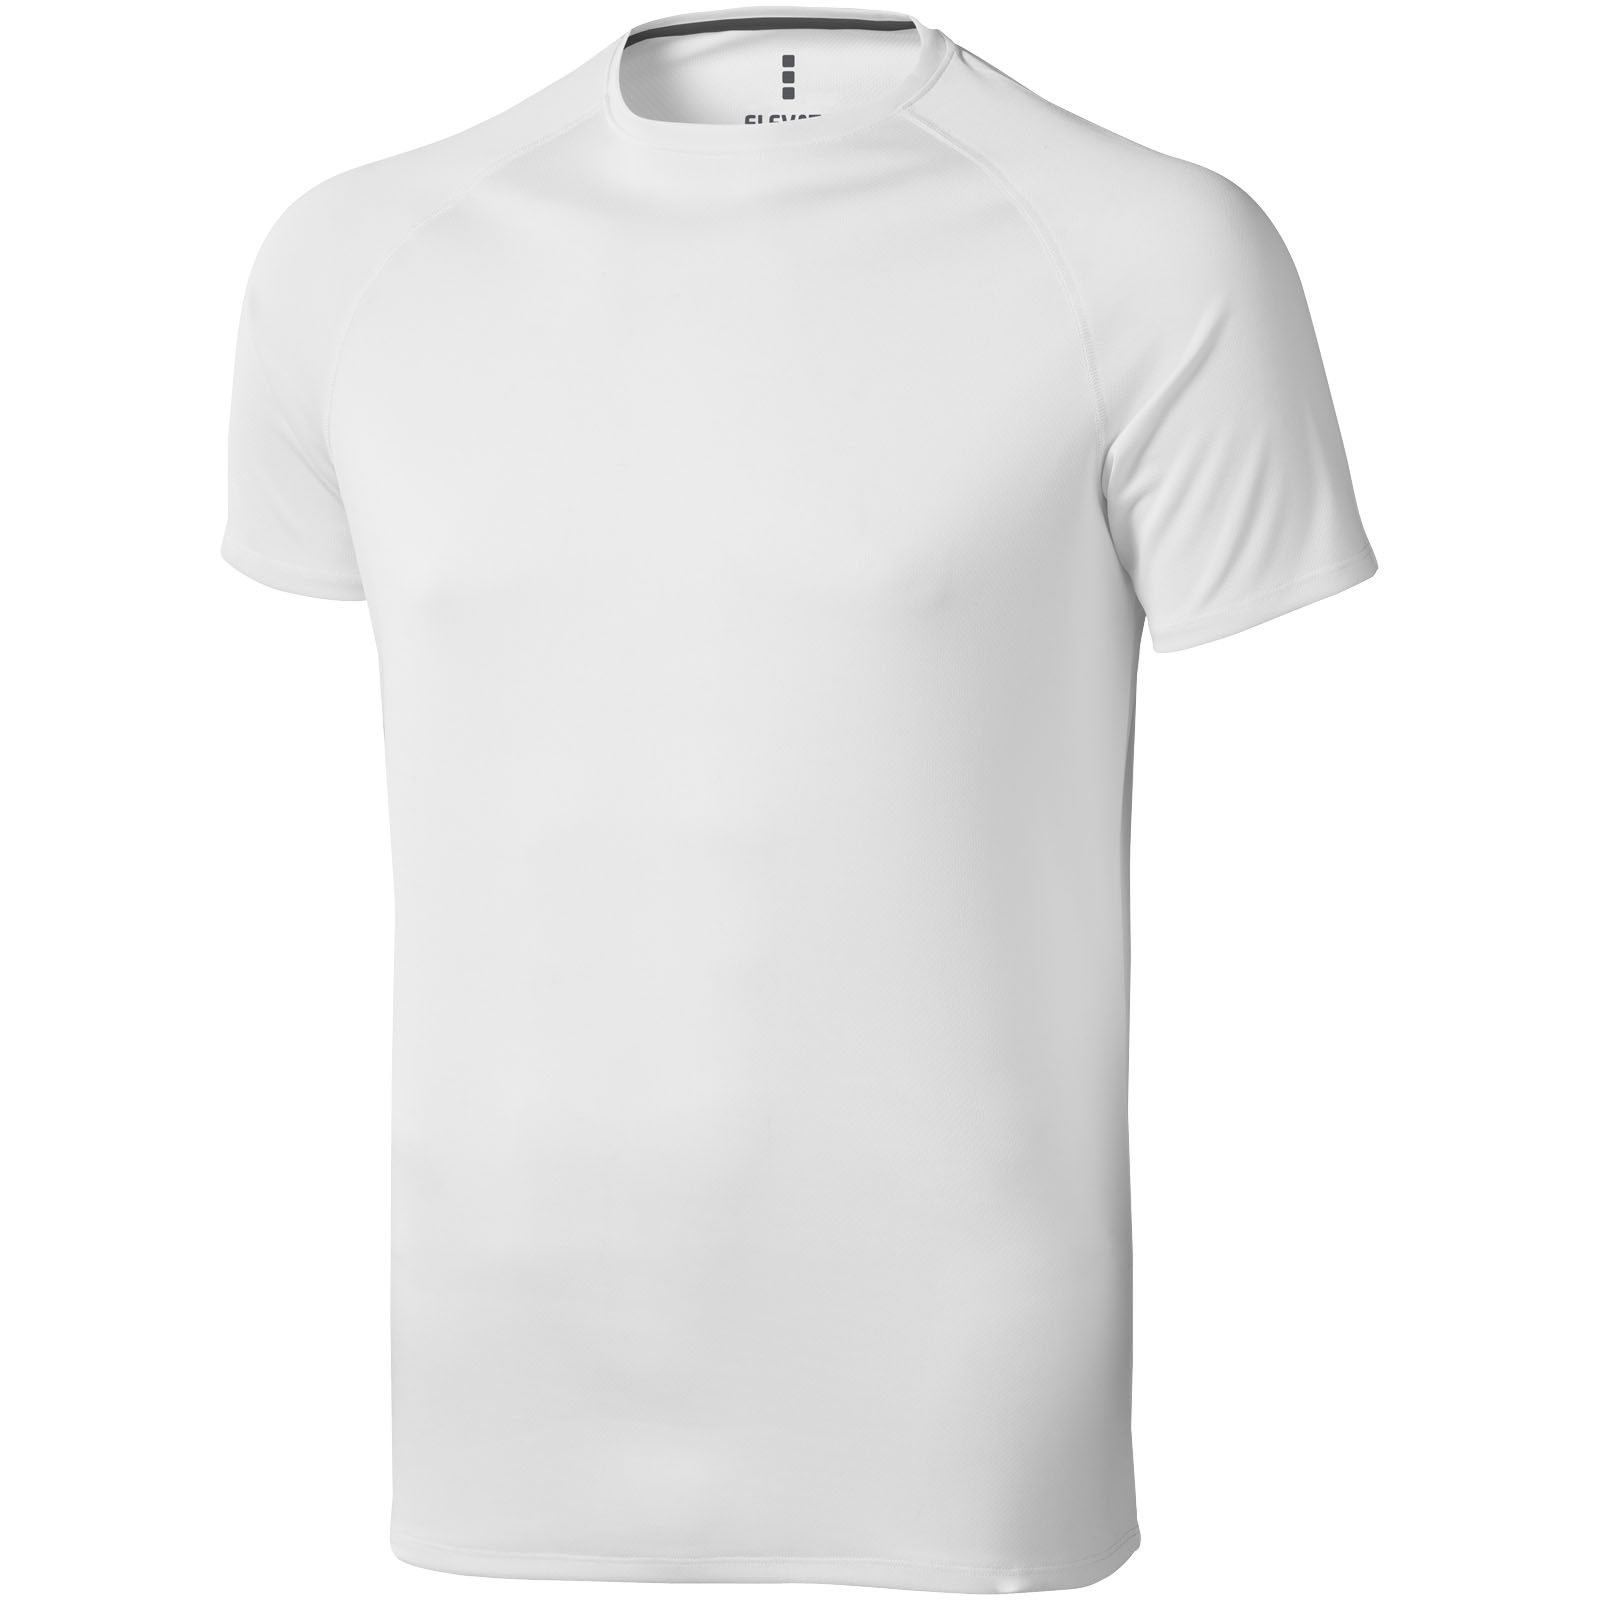 T-shirts - Niagara short sleeve men's cool fit t-shirt